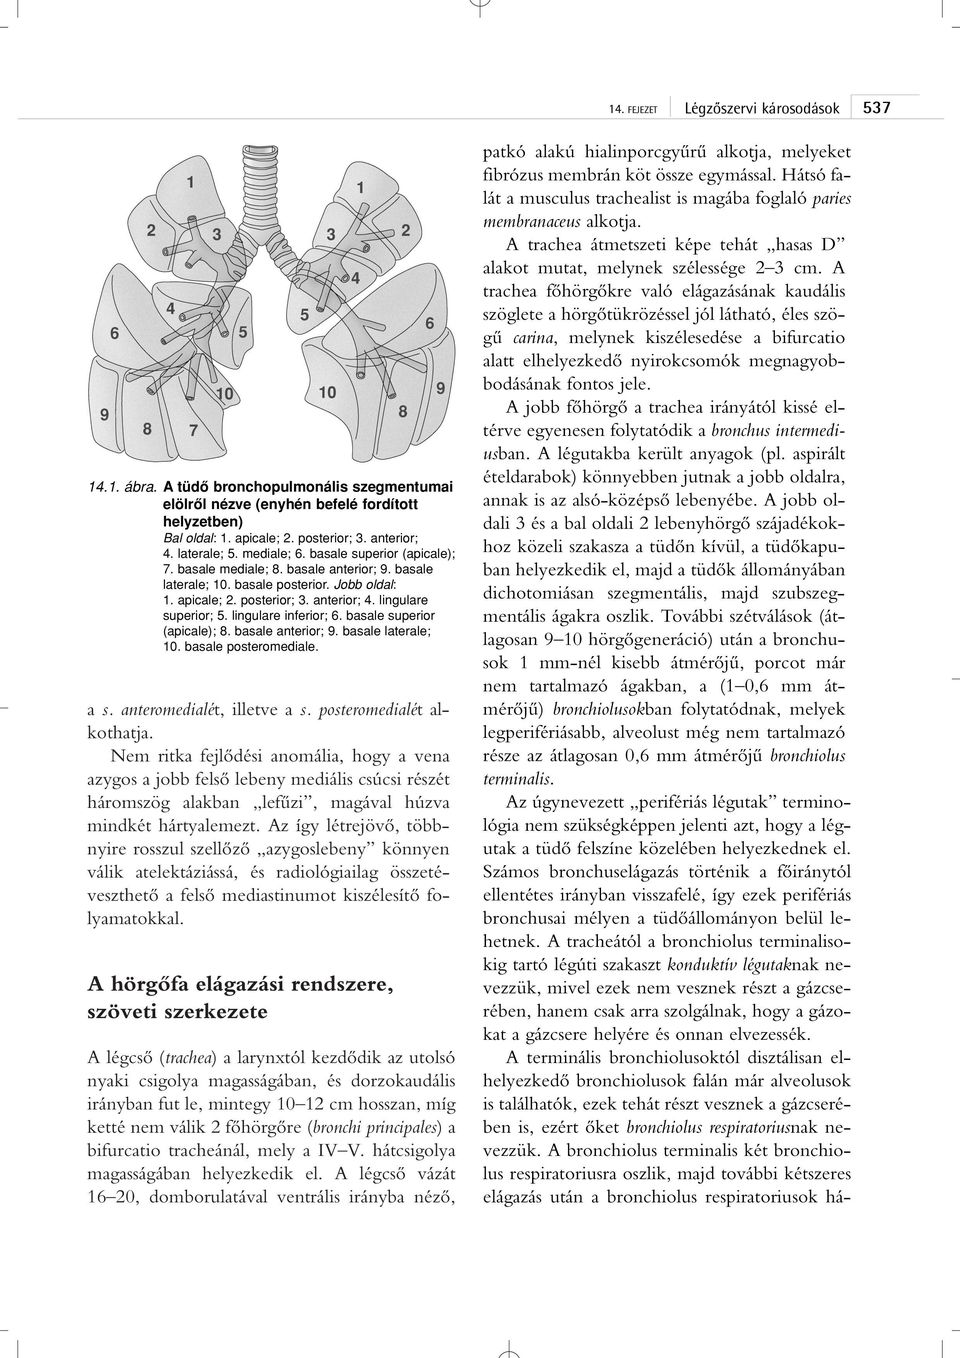 lingulare inferior; 6. basale superior (apicale); 8. basale anterior; 9. basale laterale; 10. basale posteromediale. a s. anteromedialét, illetve a s. posteromedialét alkothatja.